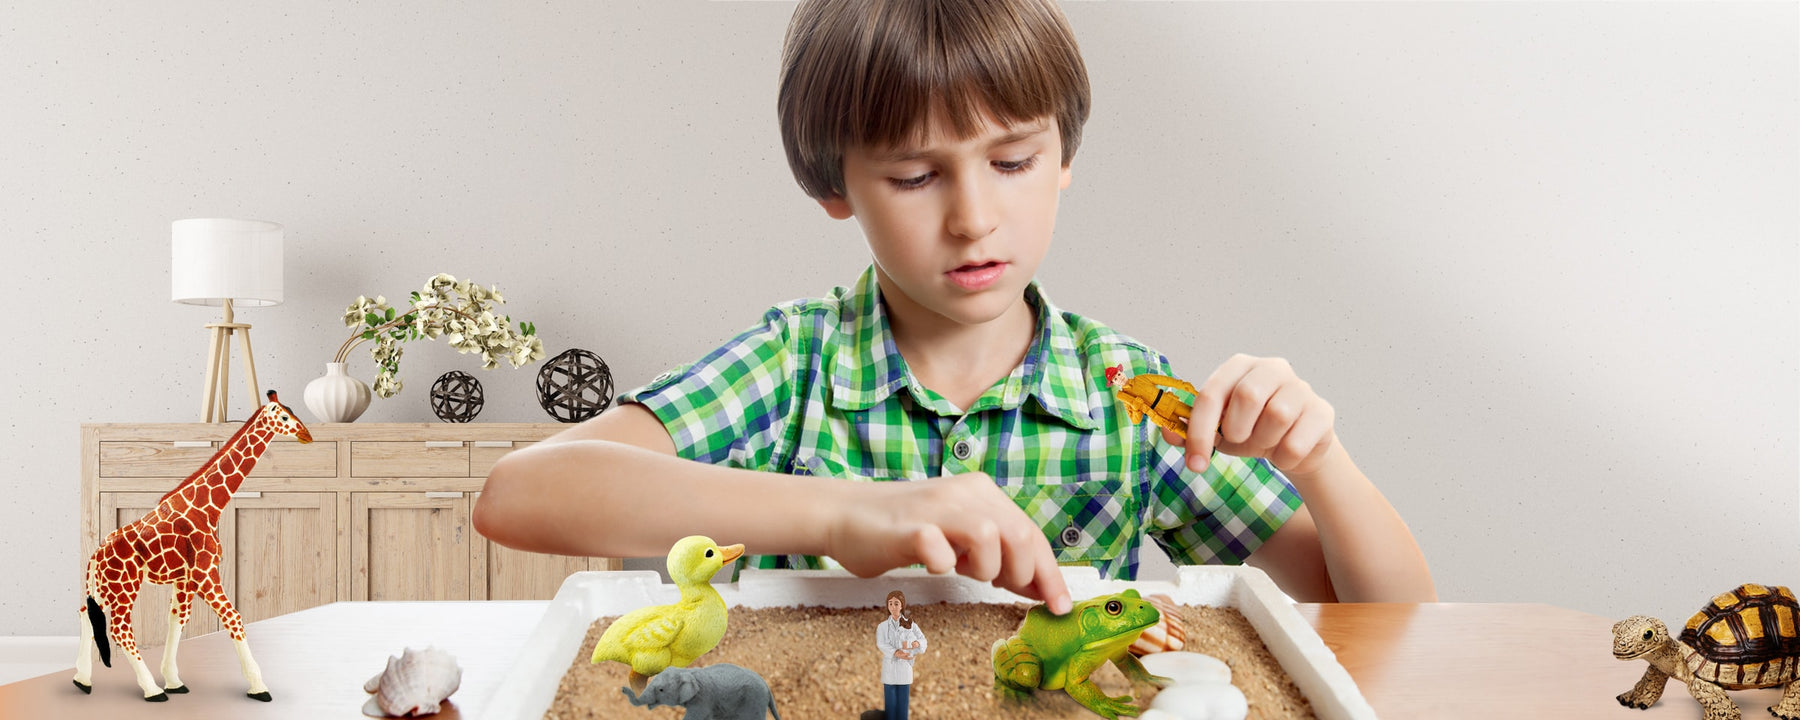 5 Ways to Foster Your Child's Imaginative Play - Safari Ltd®